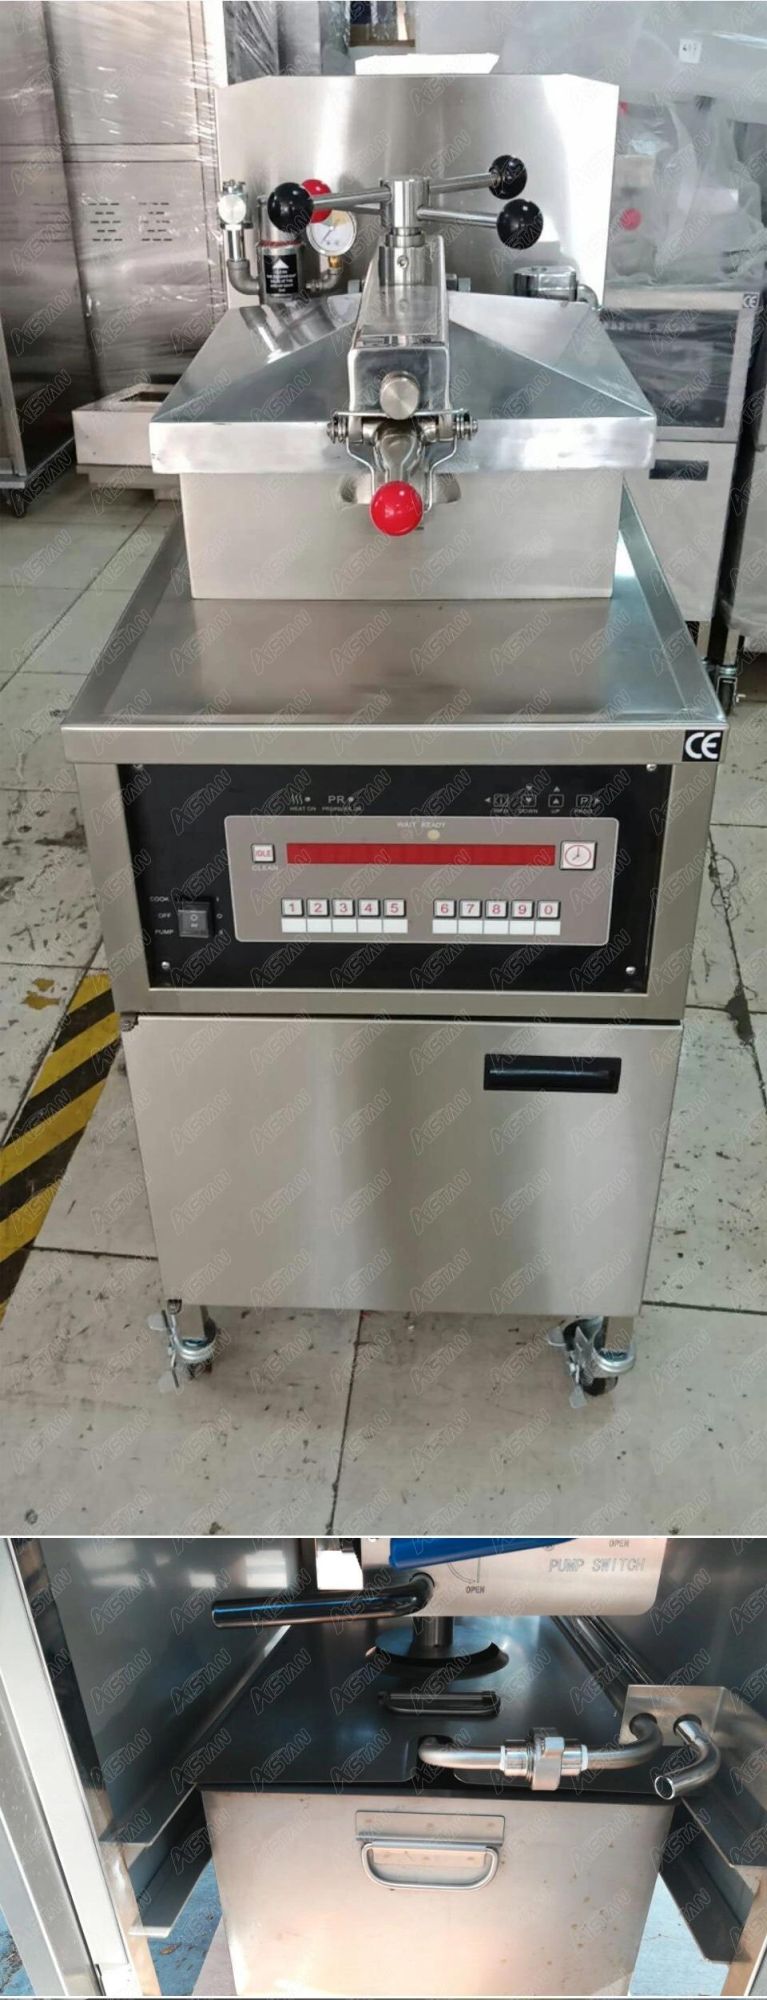 Pfg800 Henny Penny 8000 Gas Chicken Broaster Pressure Fryer USA Technology 24 Liters Free Standing